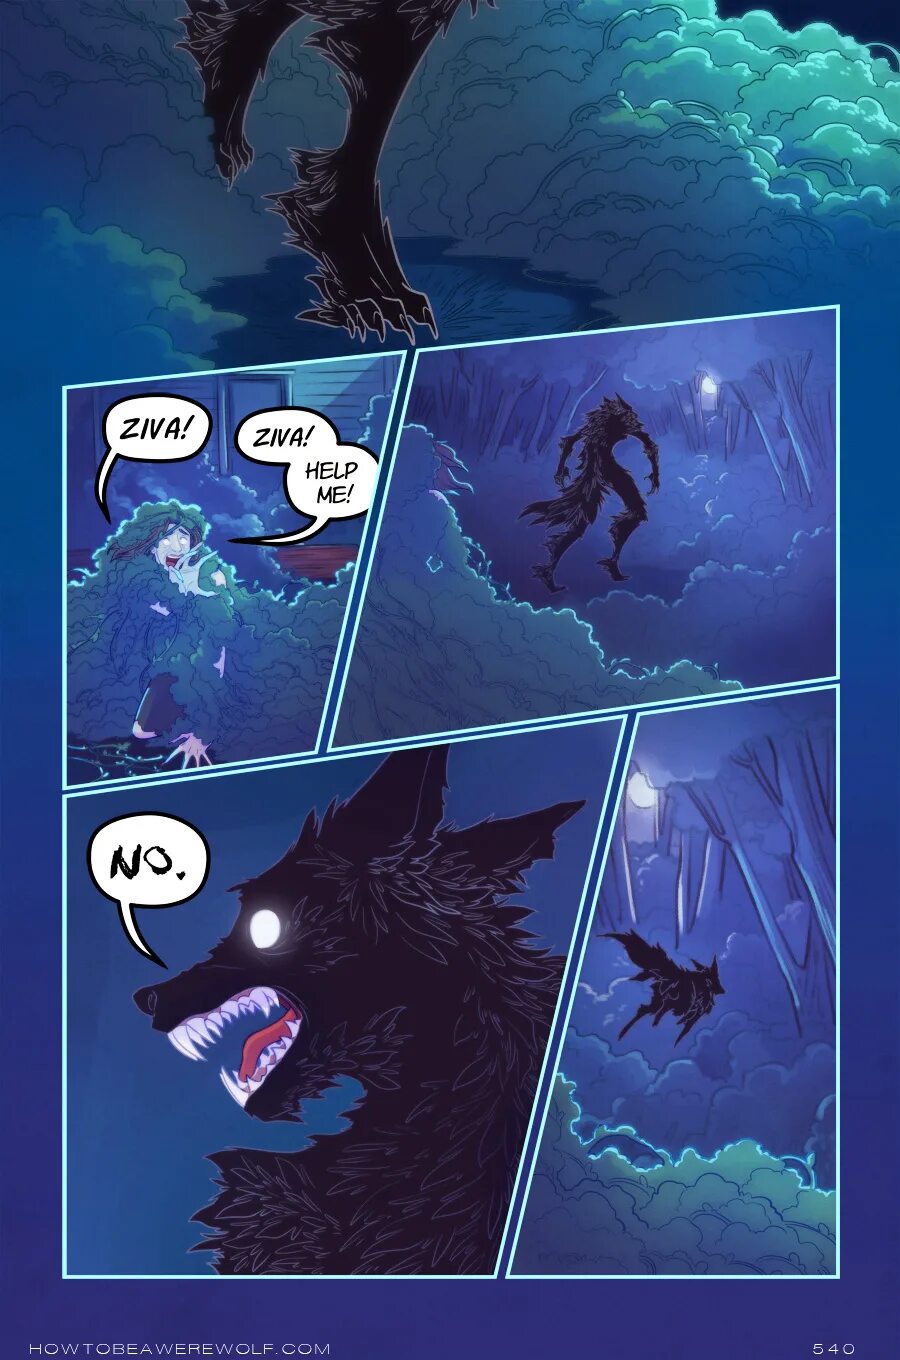 Adopting a werewolf комикс. Комиксы про оборотней на русском.